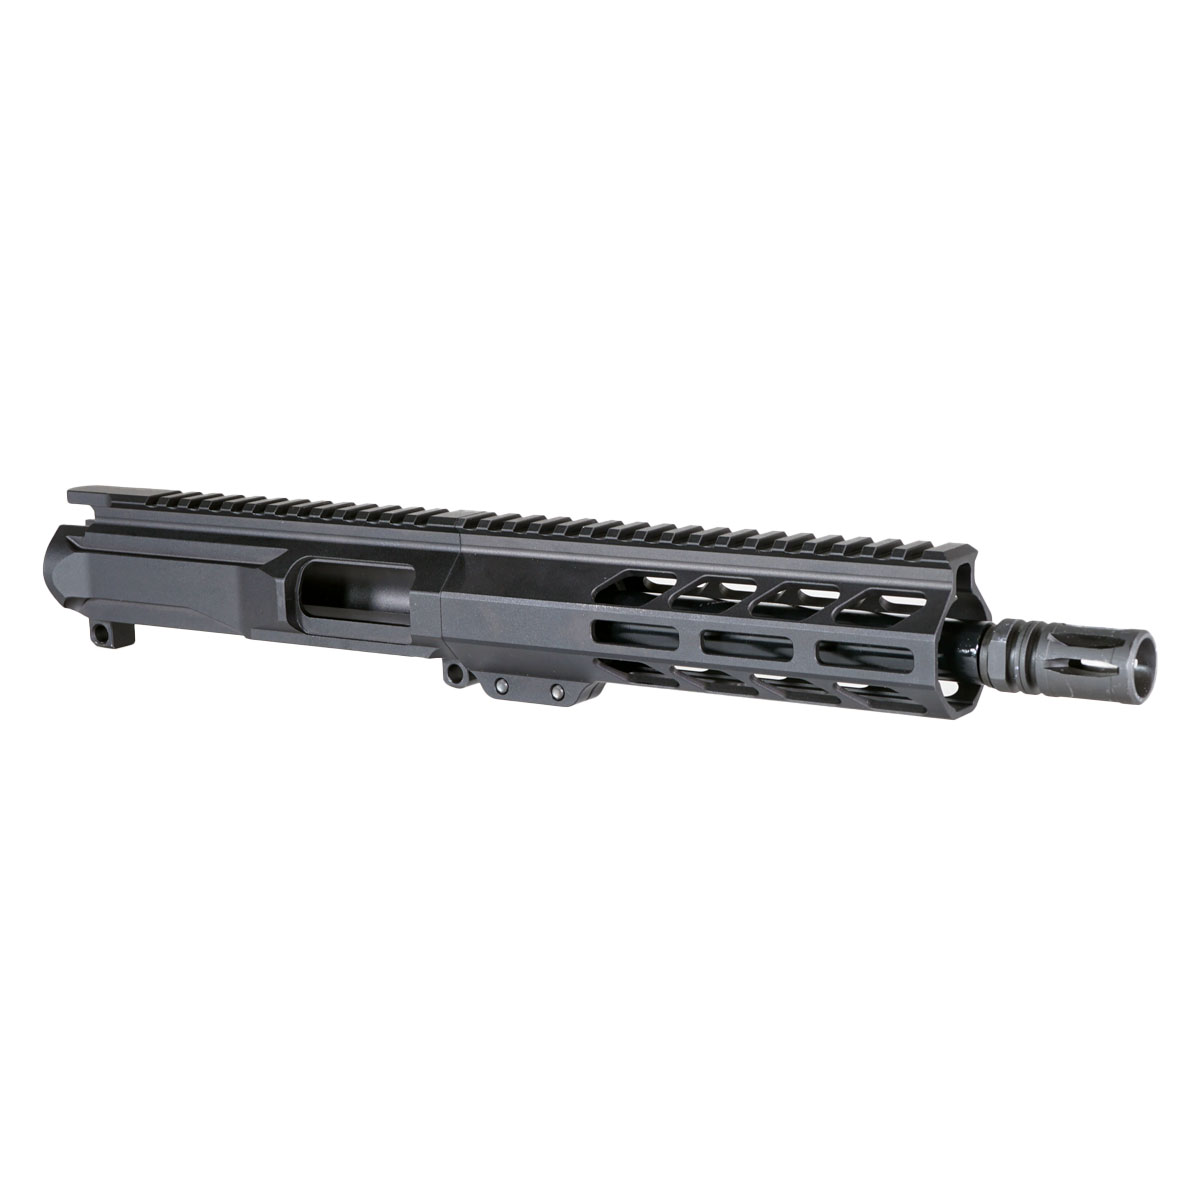 OTD 'Eternal Night Gen 2' 8.5-inch AR-15 9mm Nitride Pistol Upper Build Kit